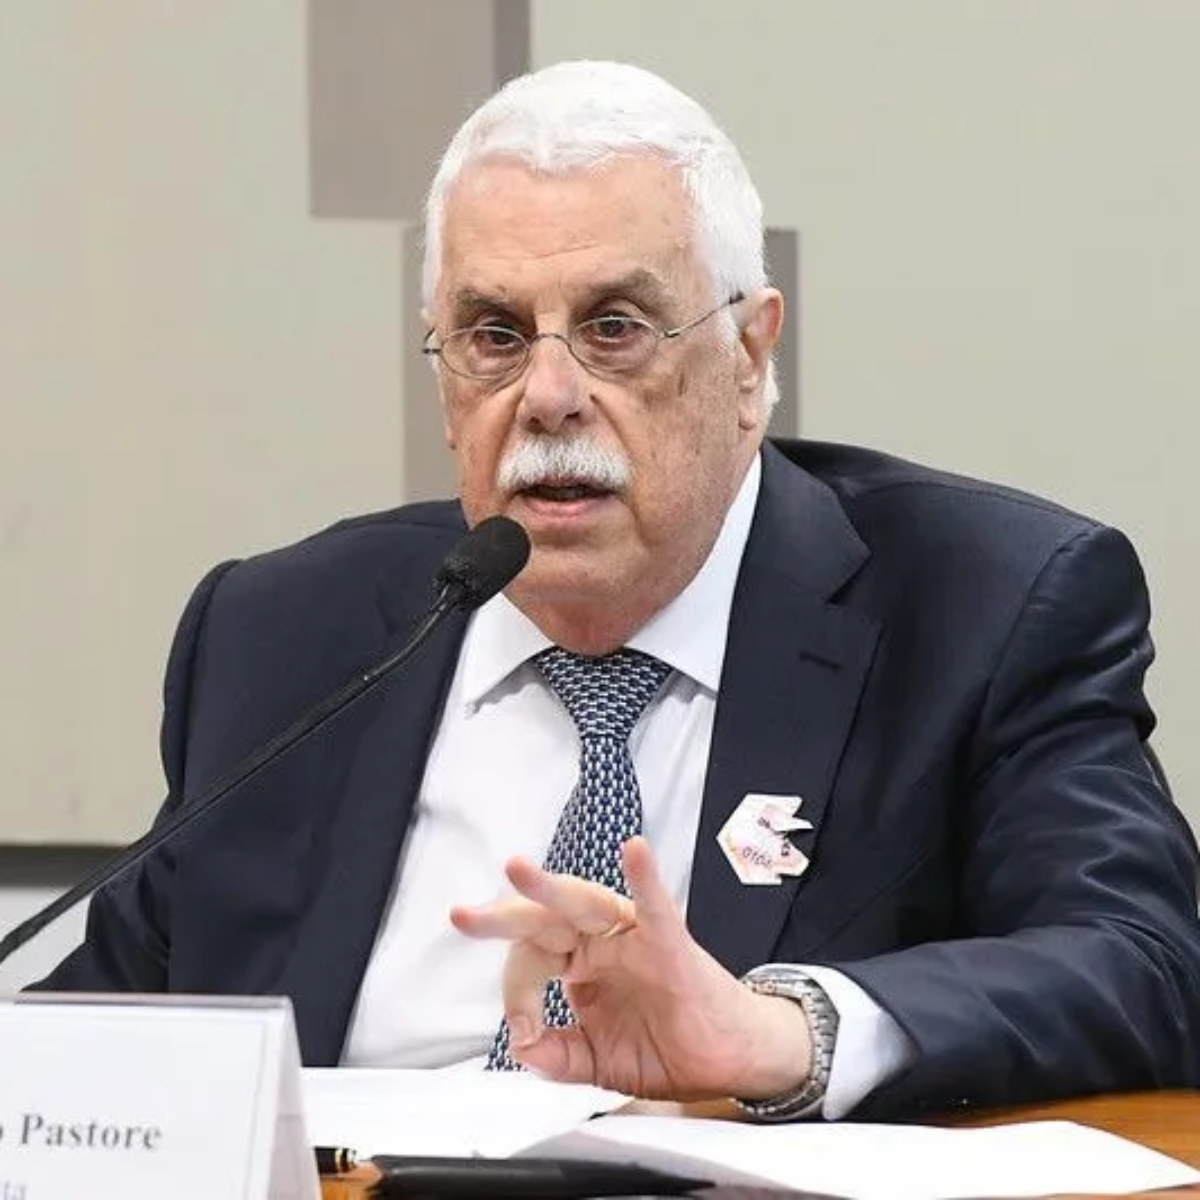 Affonso Celso Pastore, ex-presidente do Banco Central, morre aos 84 anos